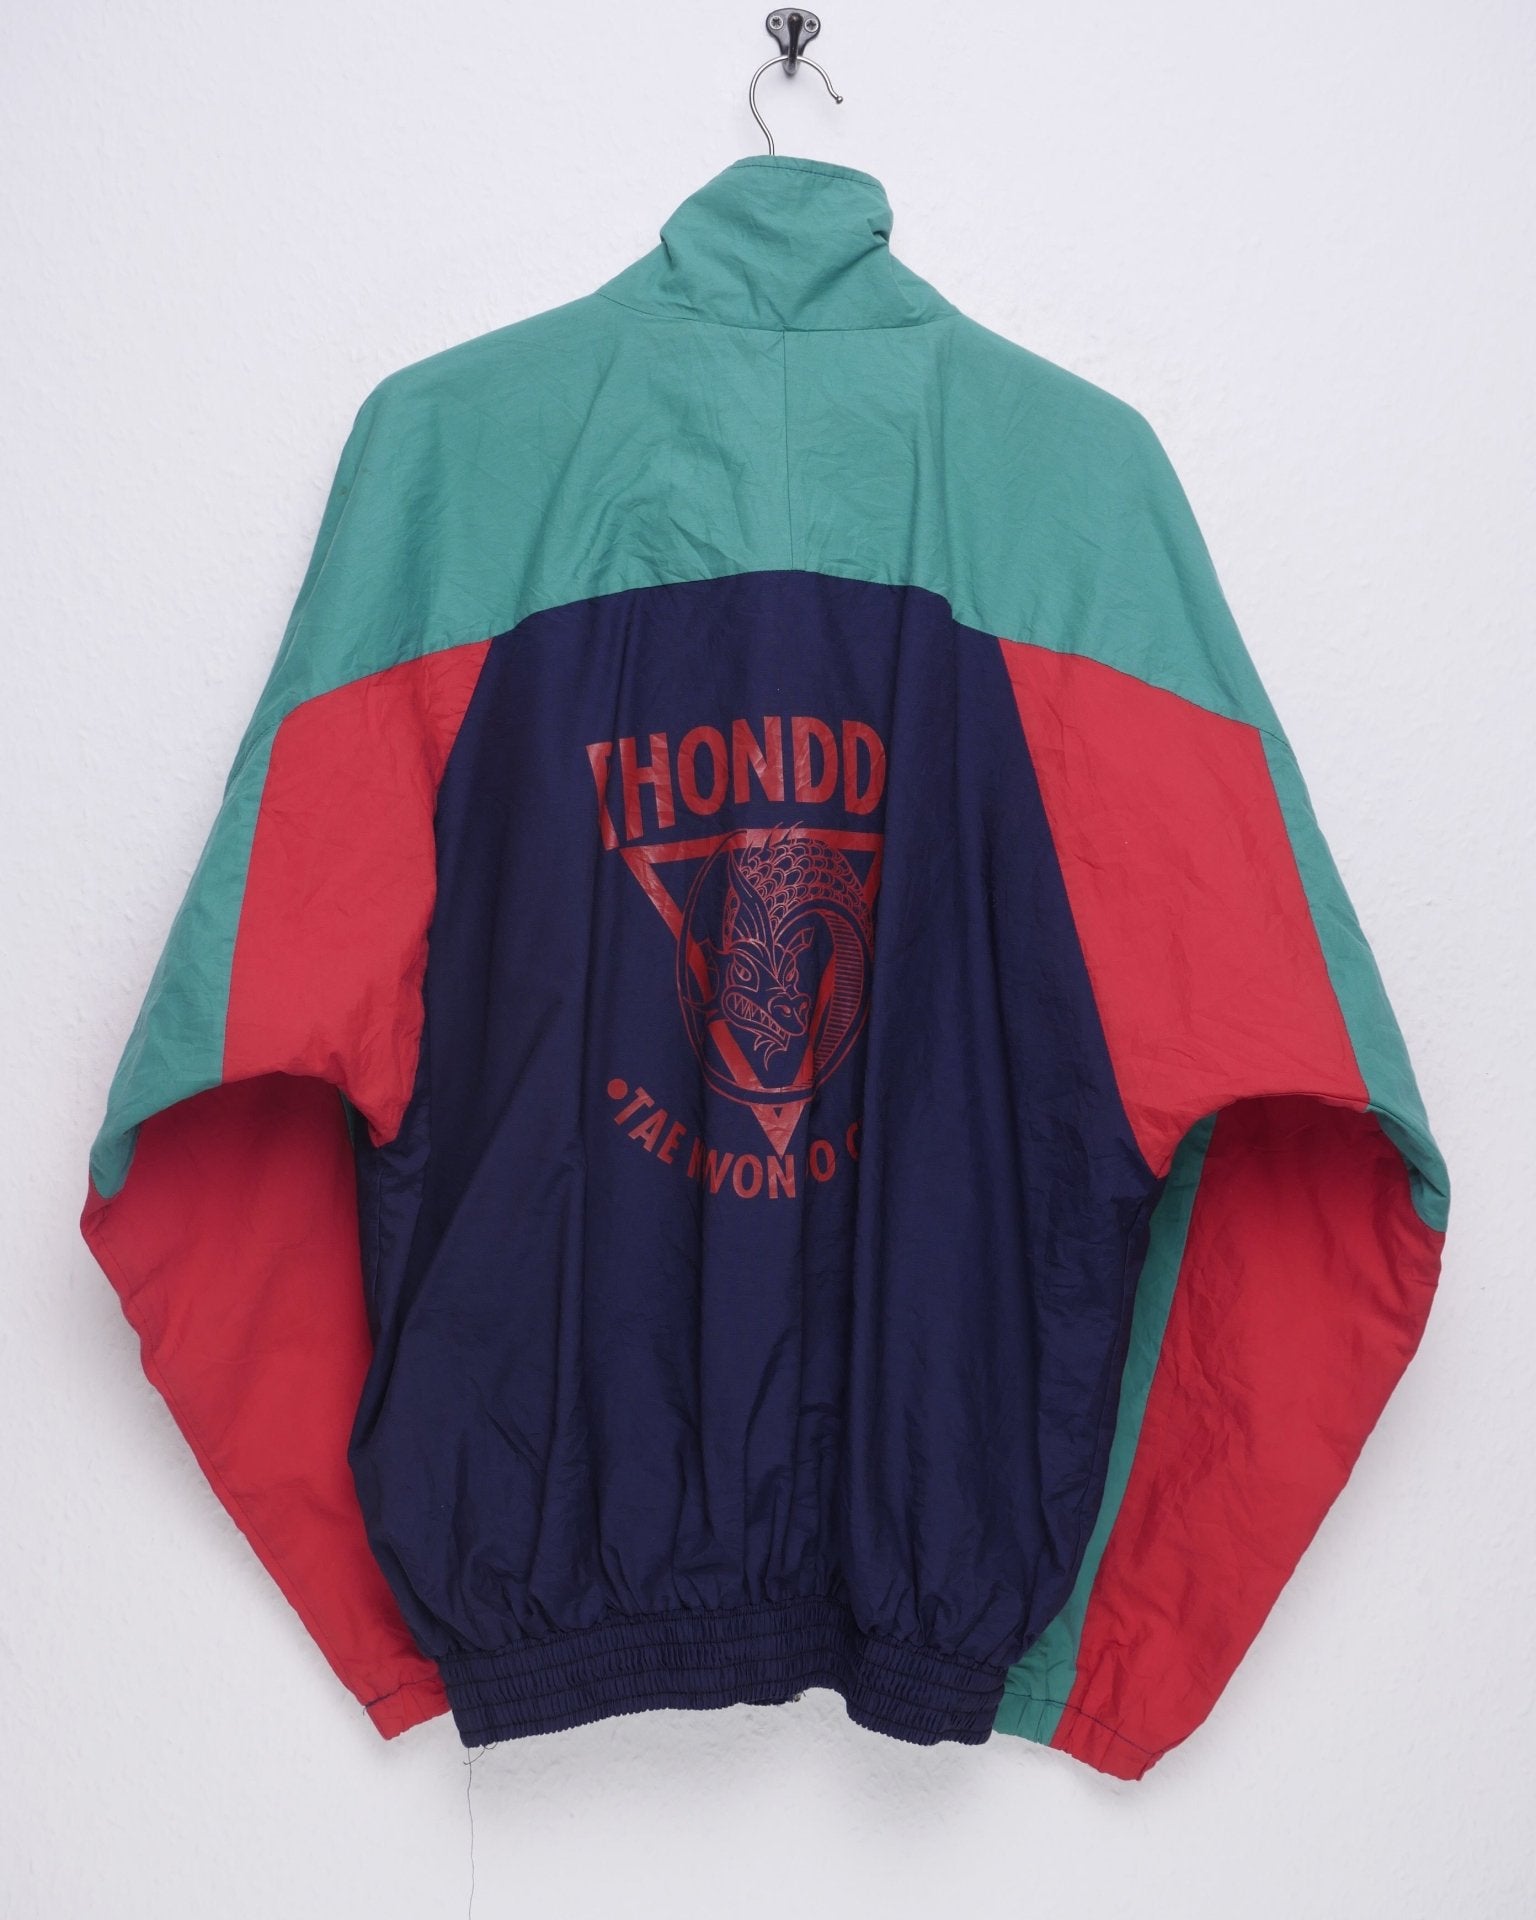 Rhondda printed Spellout Tricolor Vintage Track Jacke - Peeces